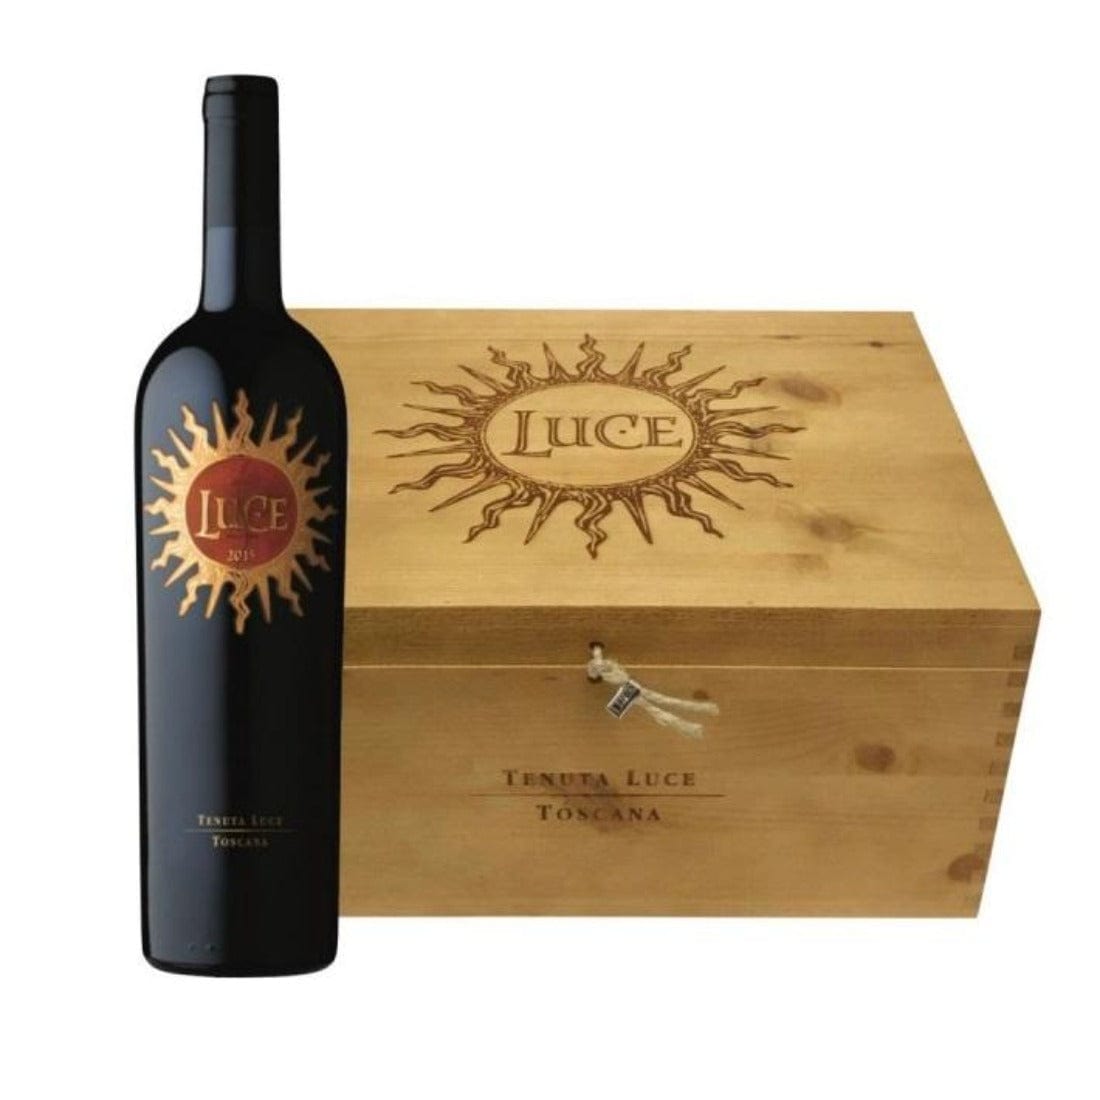 Luce della Vite 2019 Igt Toscana 6 bottiglie - Frescobaldi-Vinolog24.com